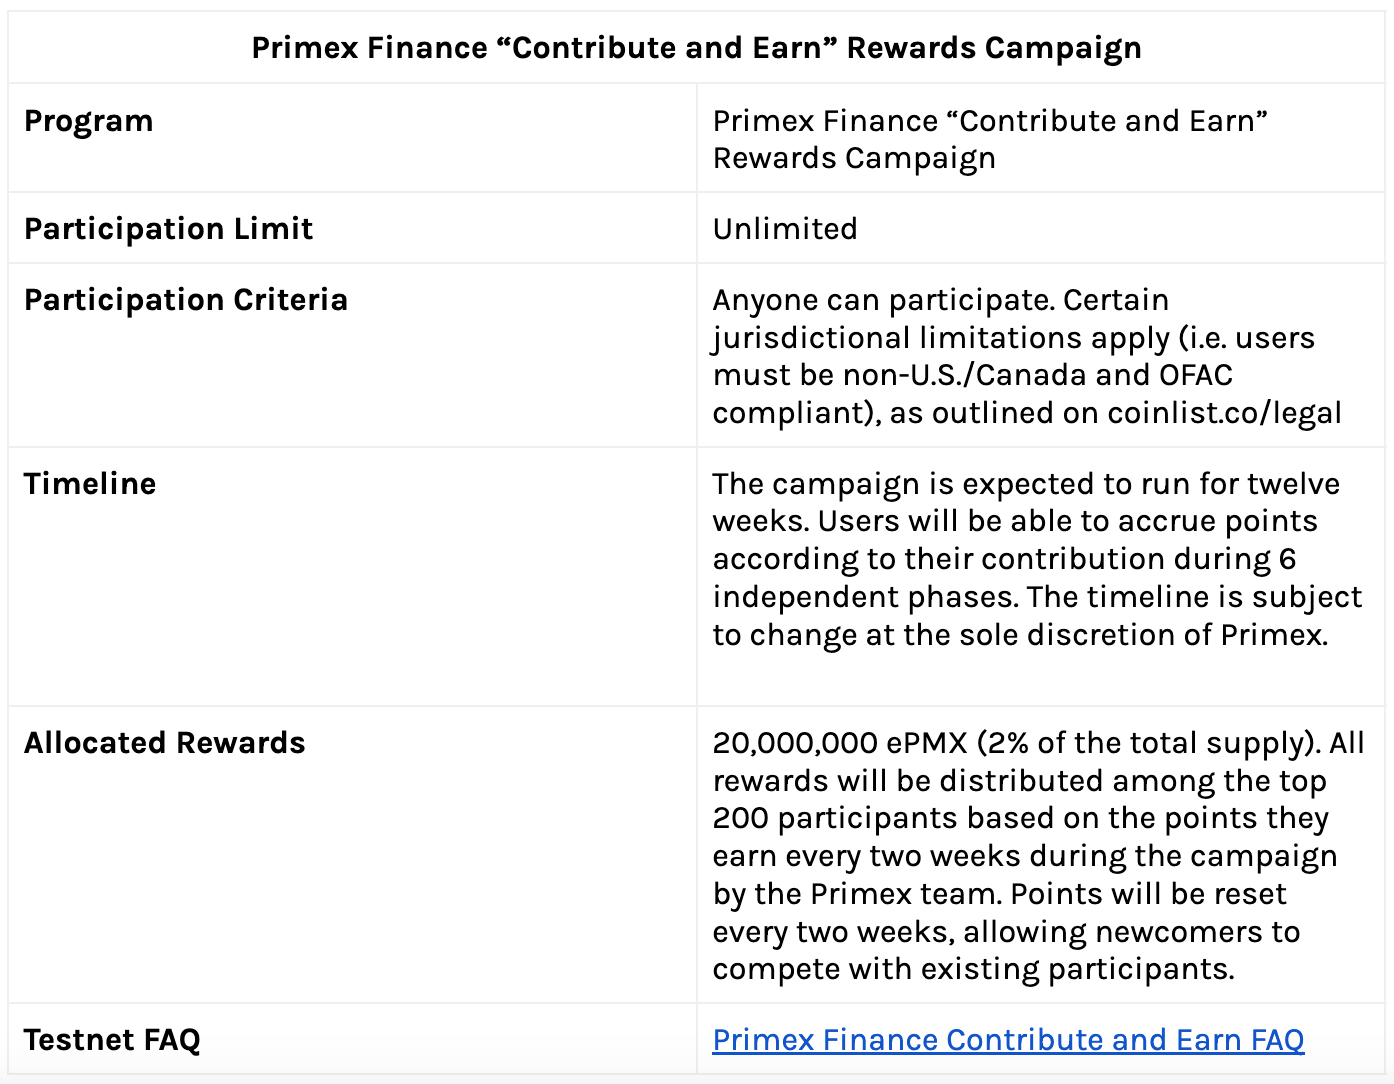 Announcing the Primex Finance Rewards Campaign on CoinList